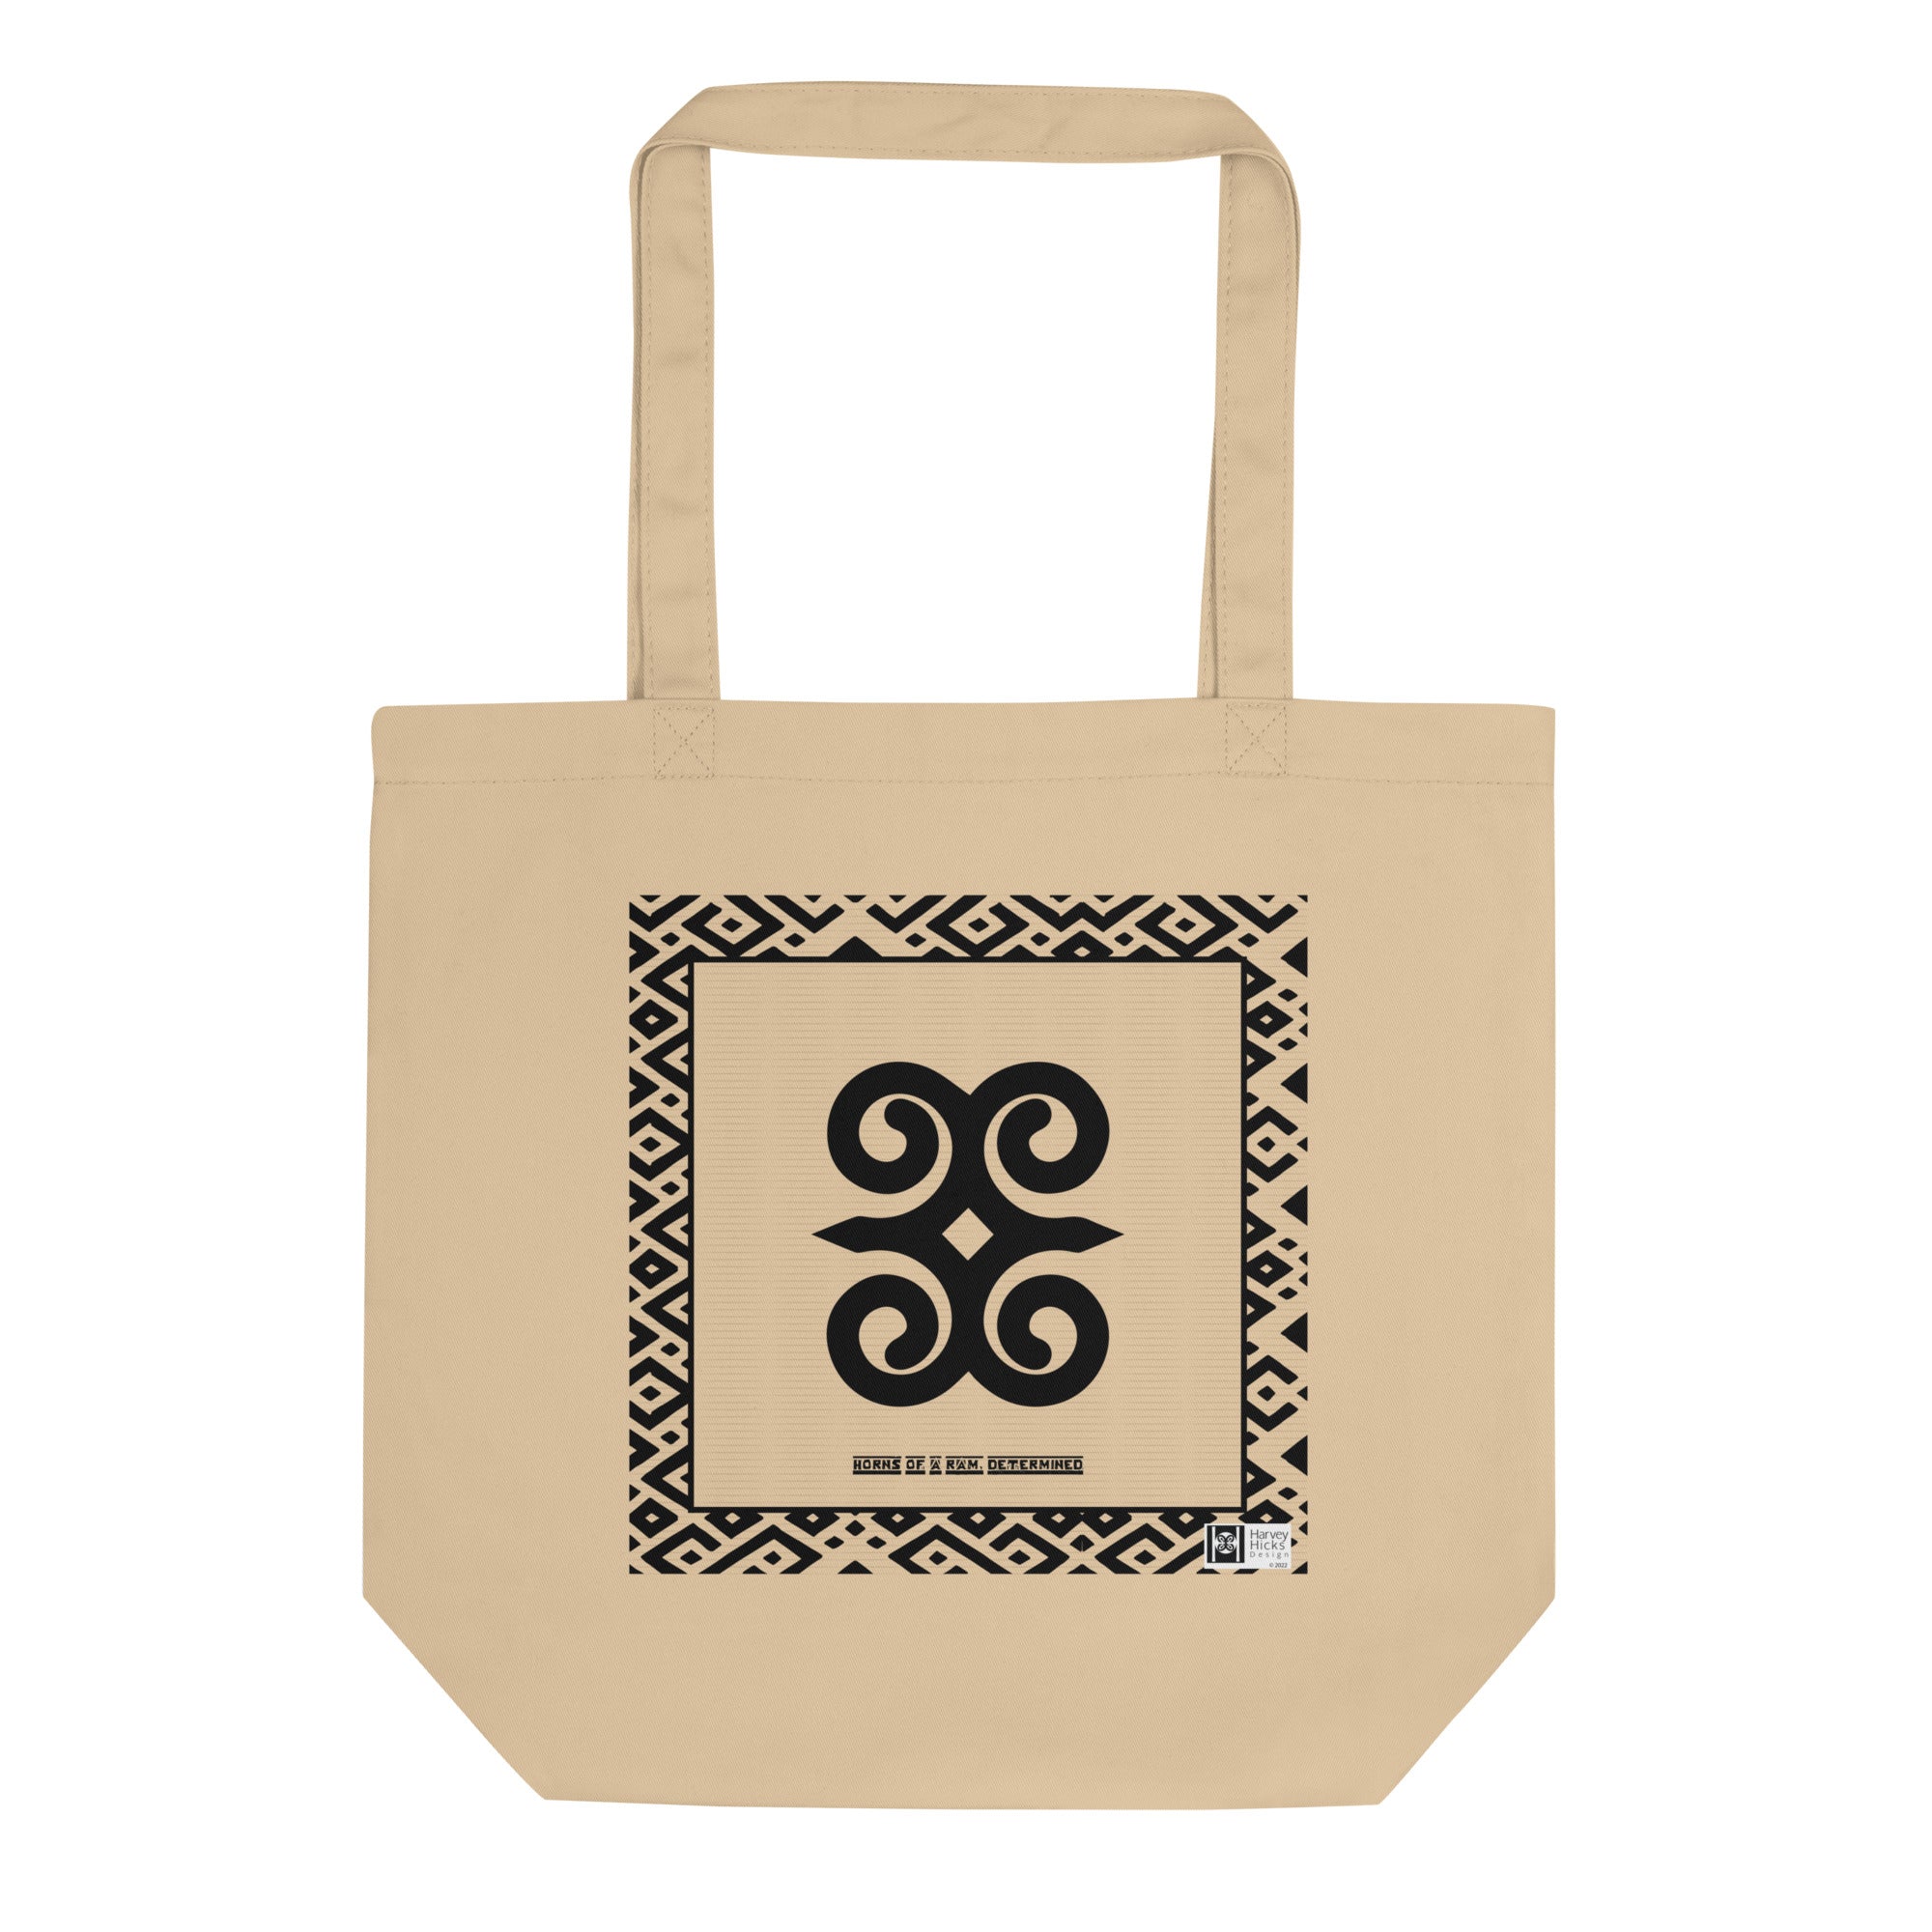 100% cotton Eco Tote Bag, featuring the Adinkra symbol for tenacity